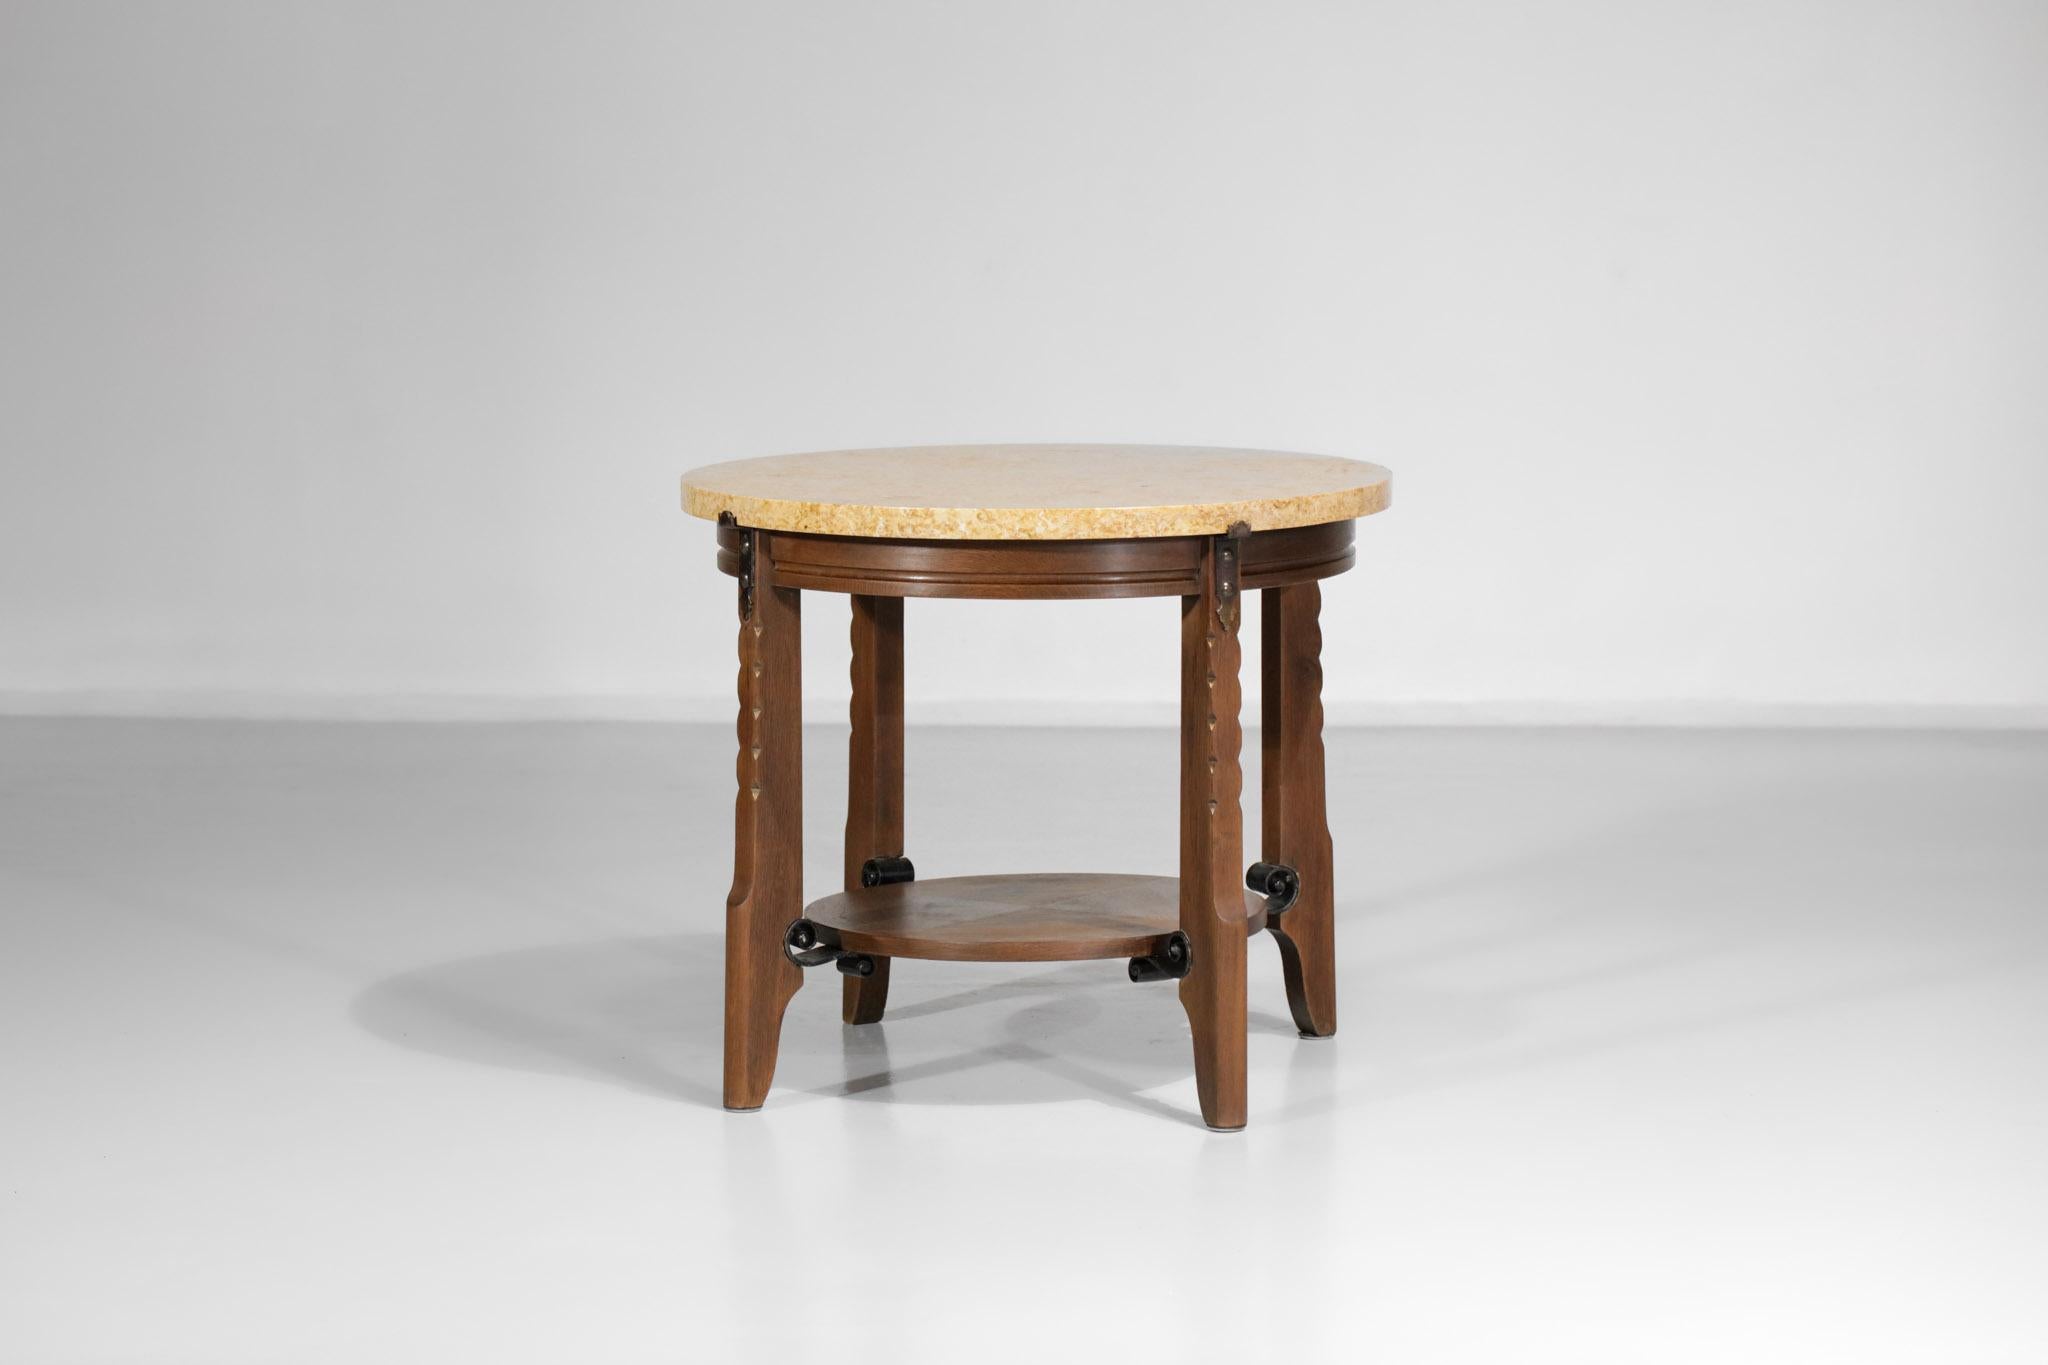 Oak and Travertine Art Deco Coffee Table 1930's Gueridon, E556 For Sale 4